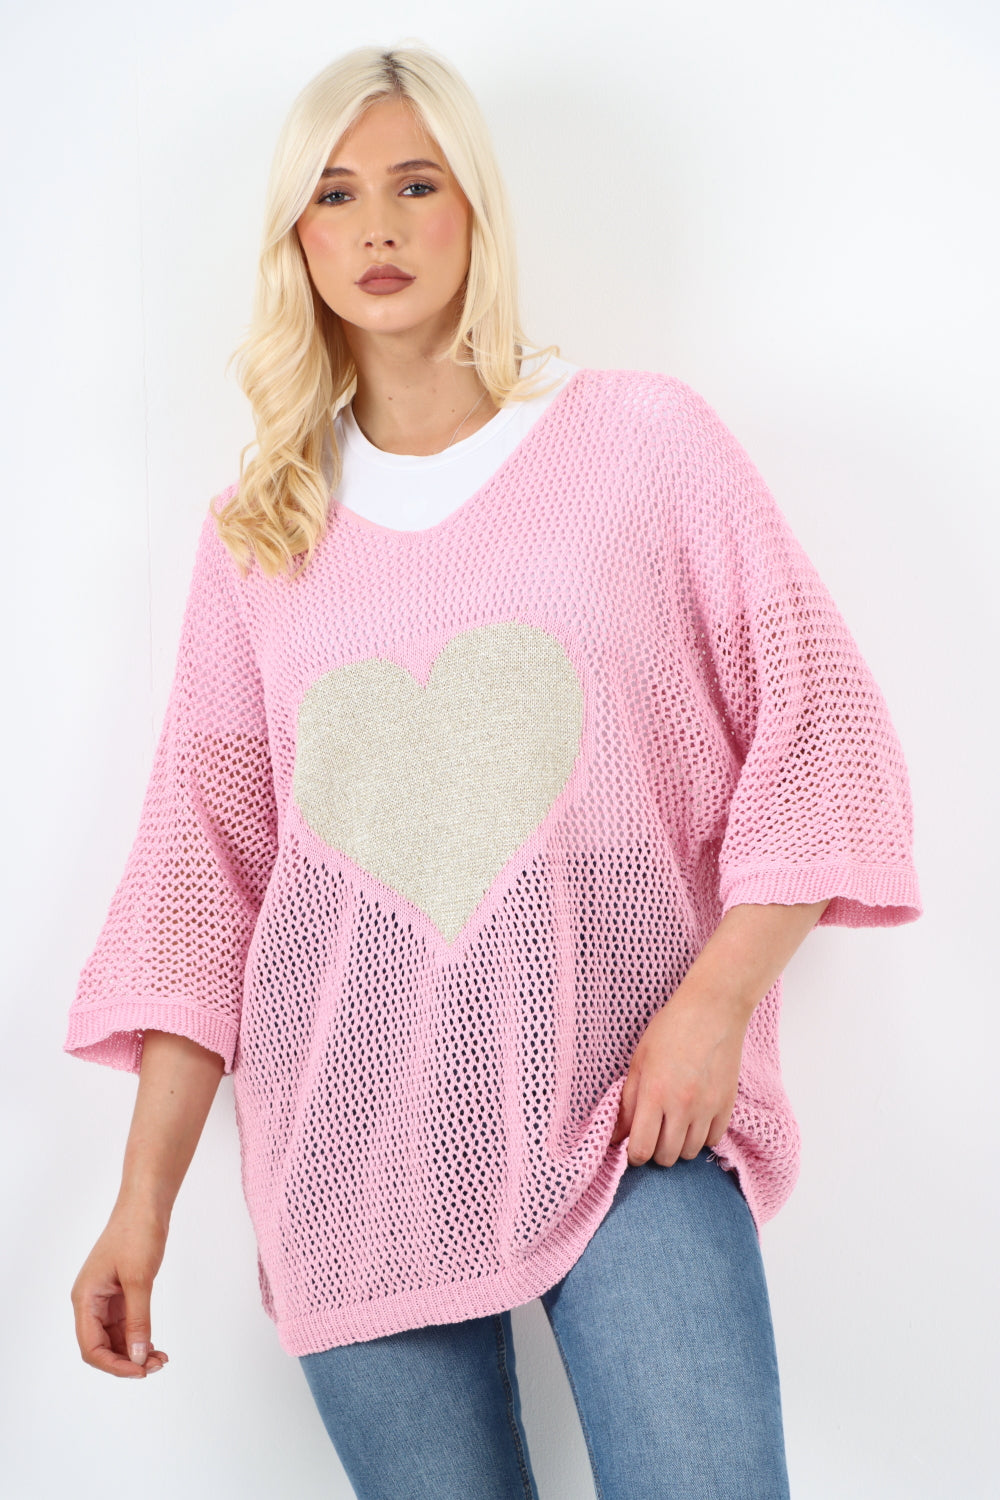 Italian Chunky Knit Heart Print Oversized Jumper Top